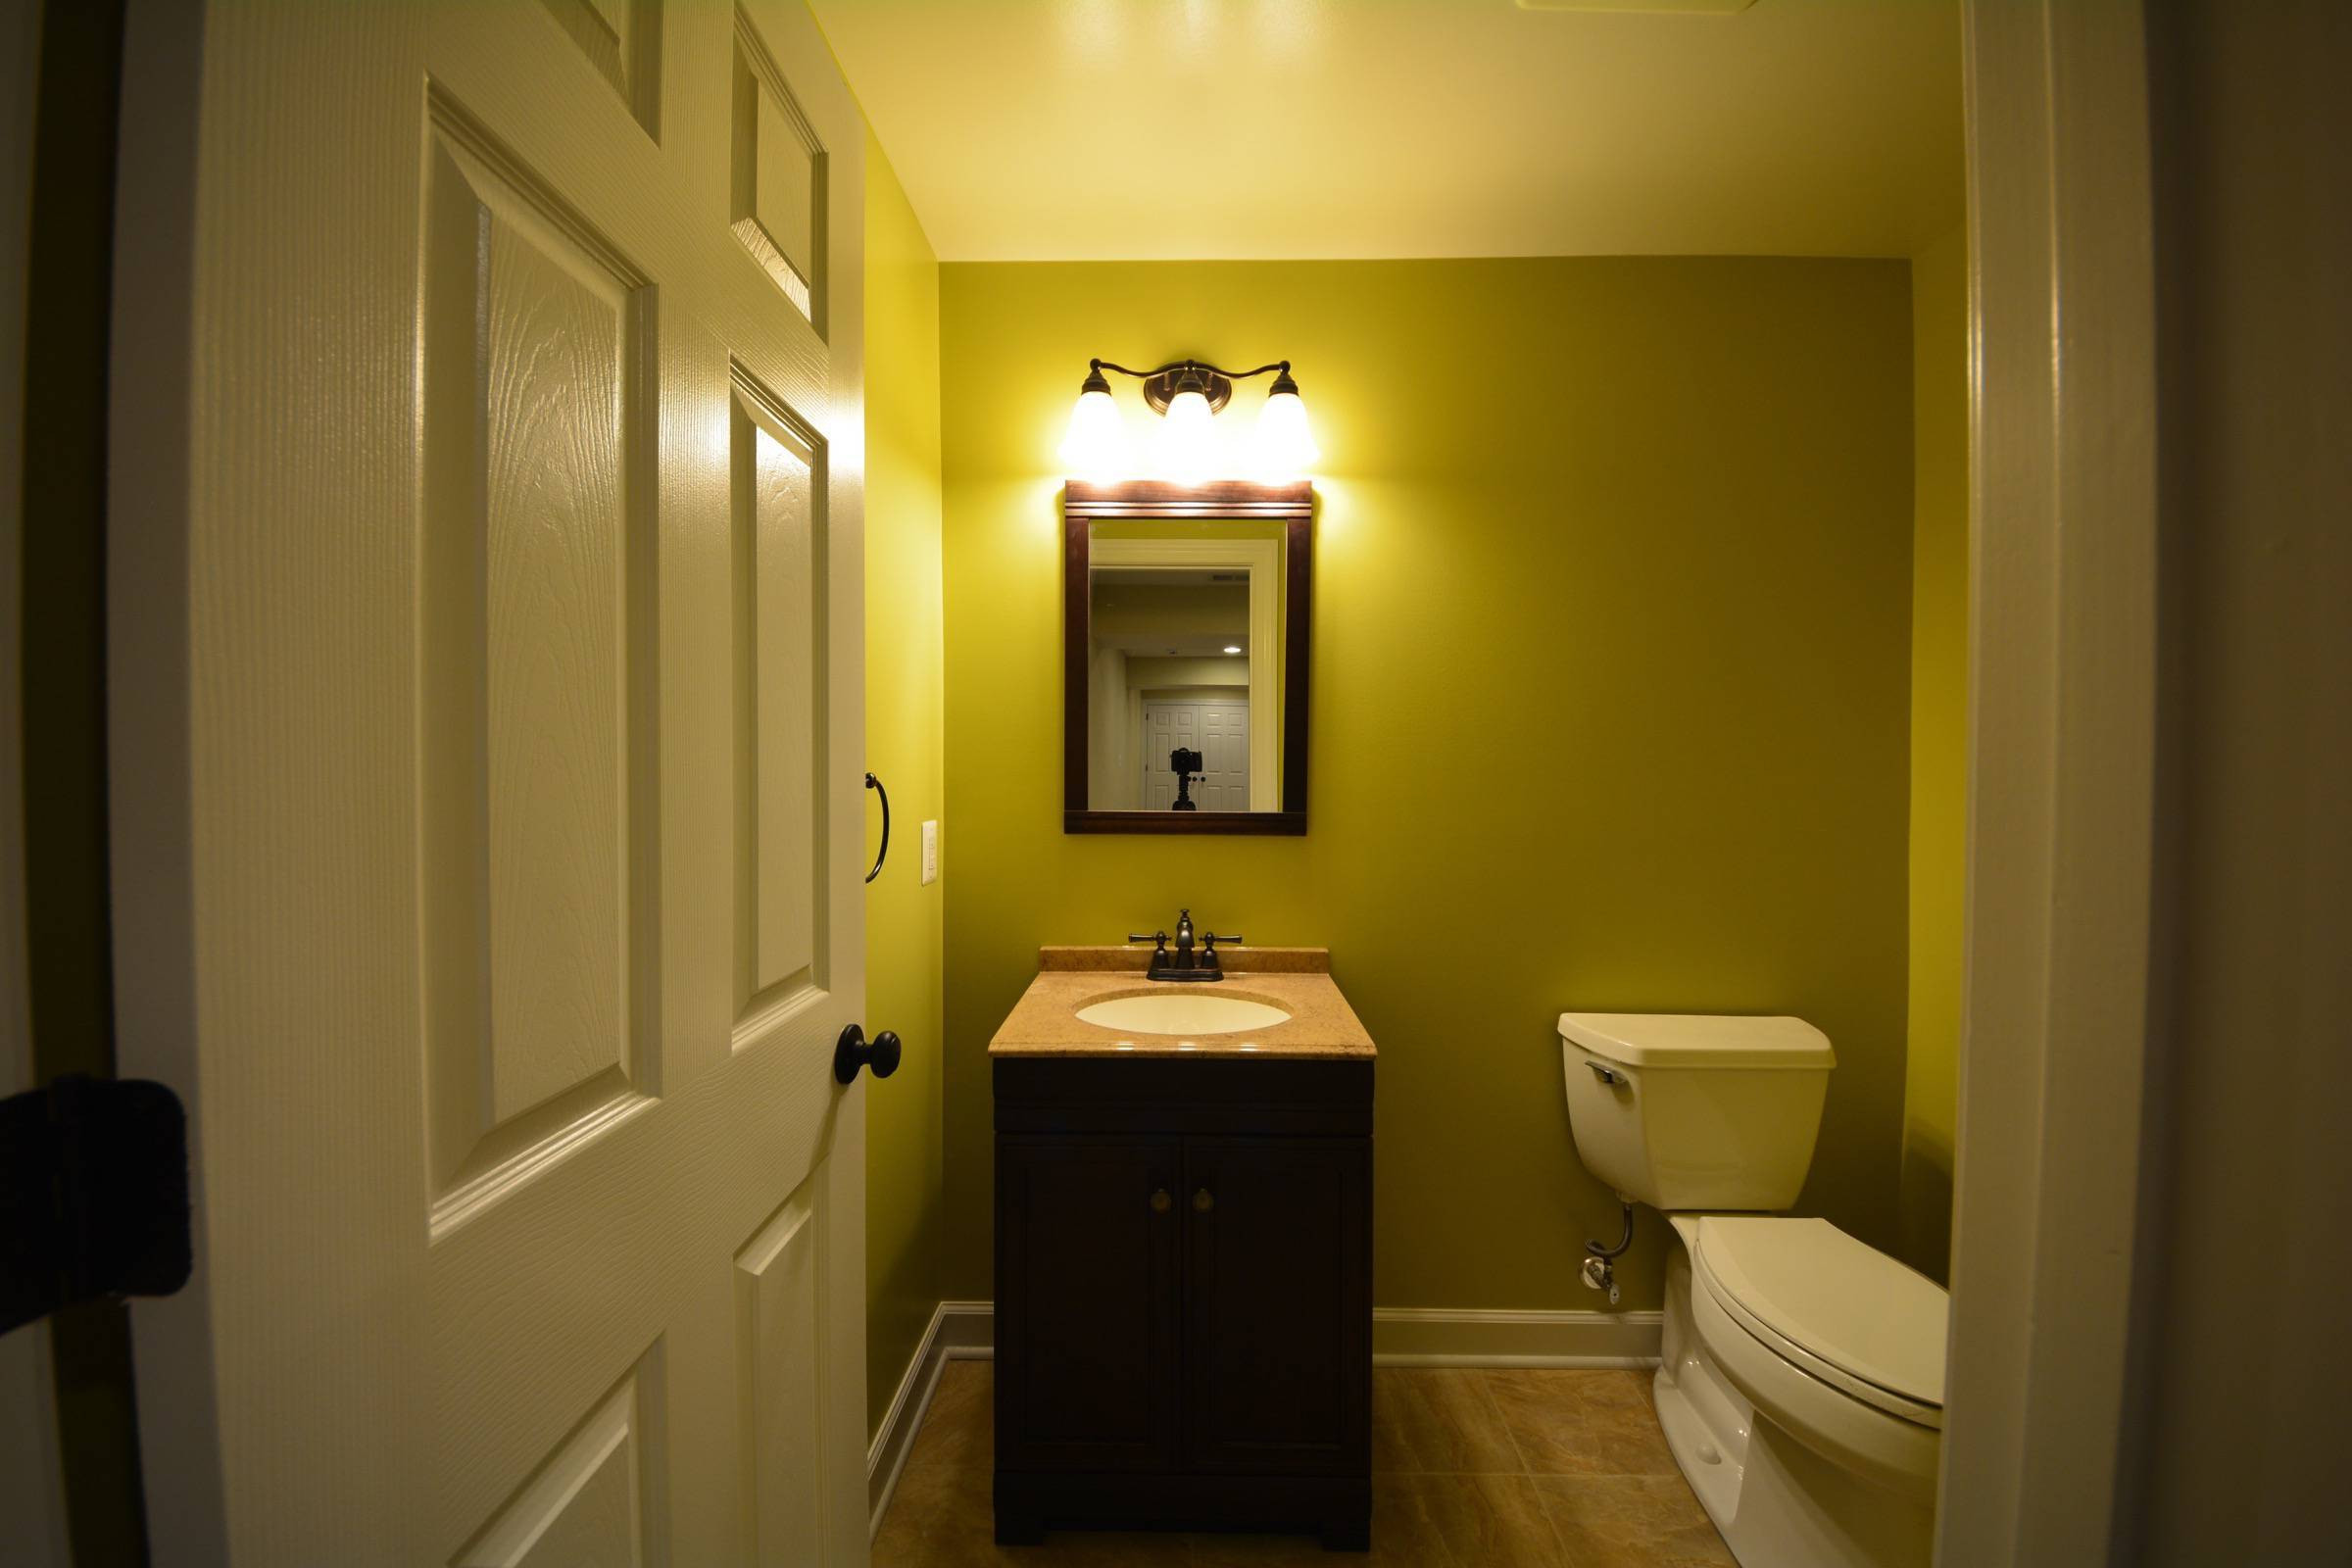 Basement Bathroom Ideas Small Spaces
 Basement Half Bathrooms Ideas Basement Masters